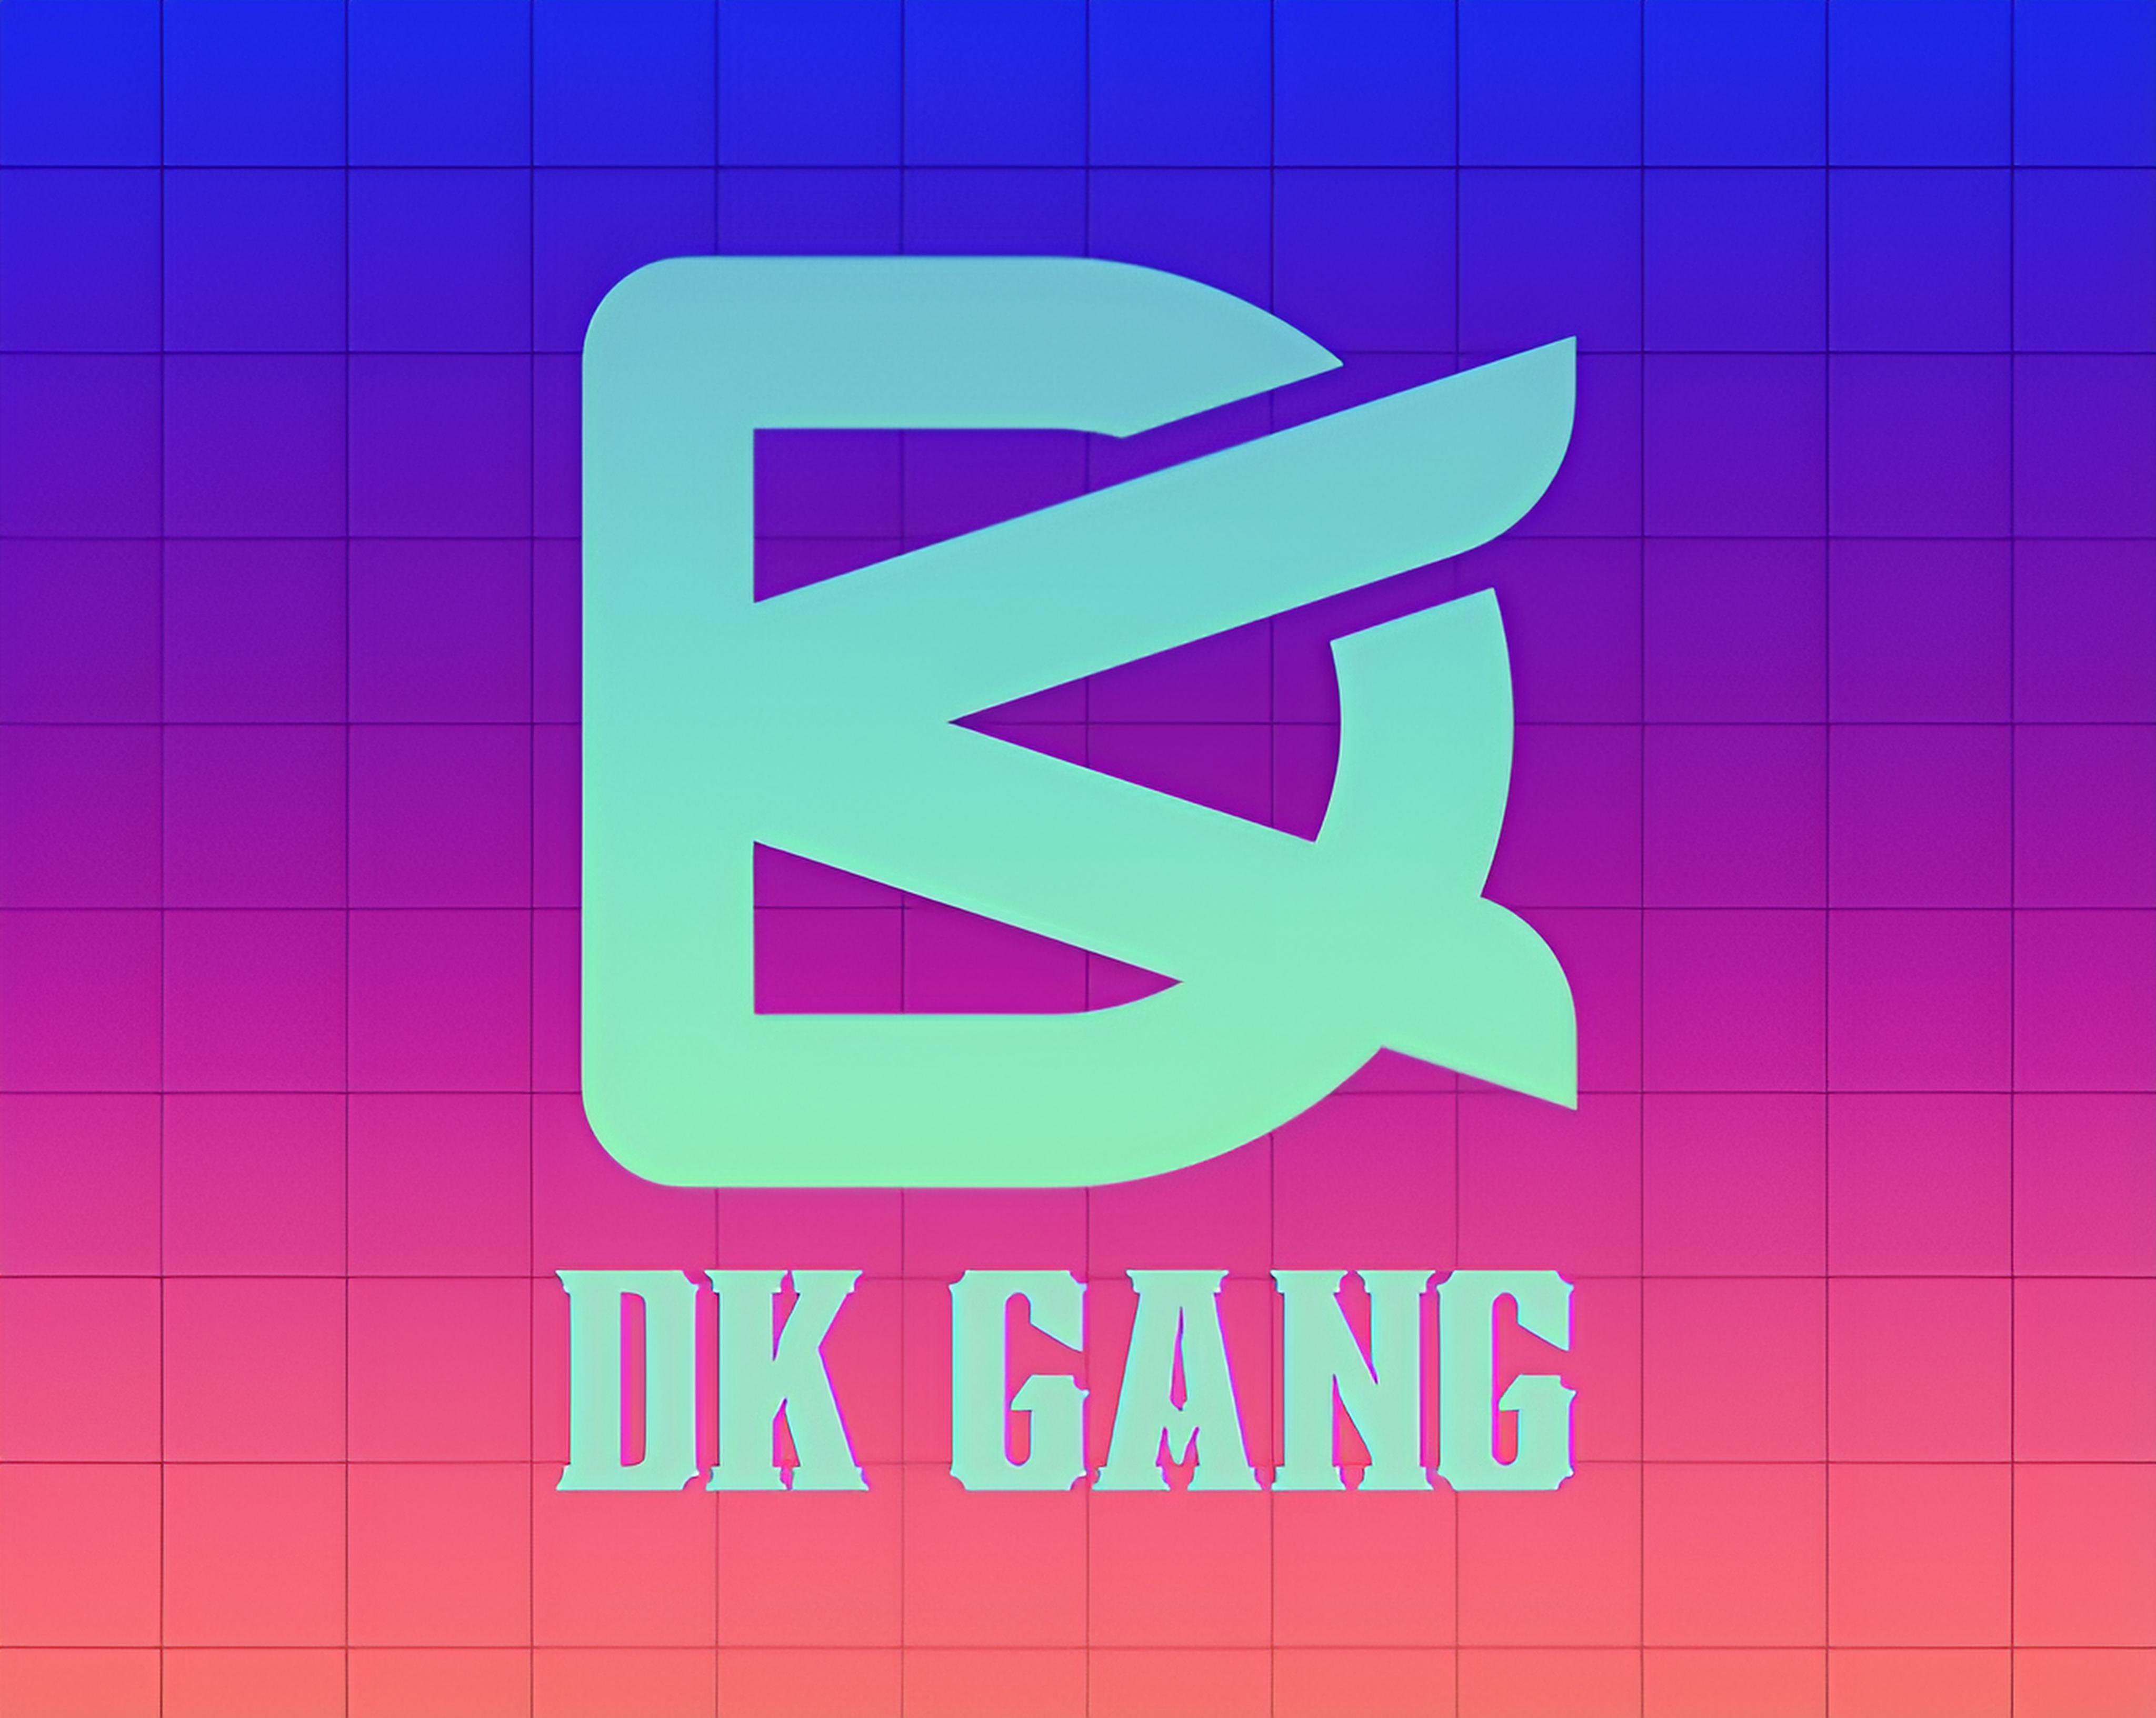 DK GANG